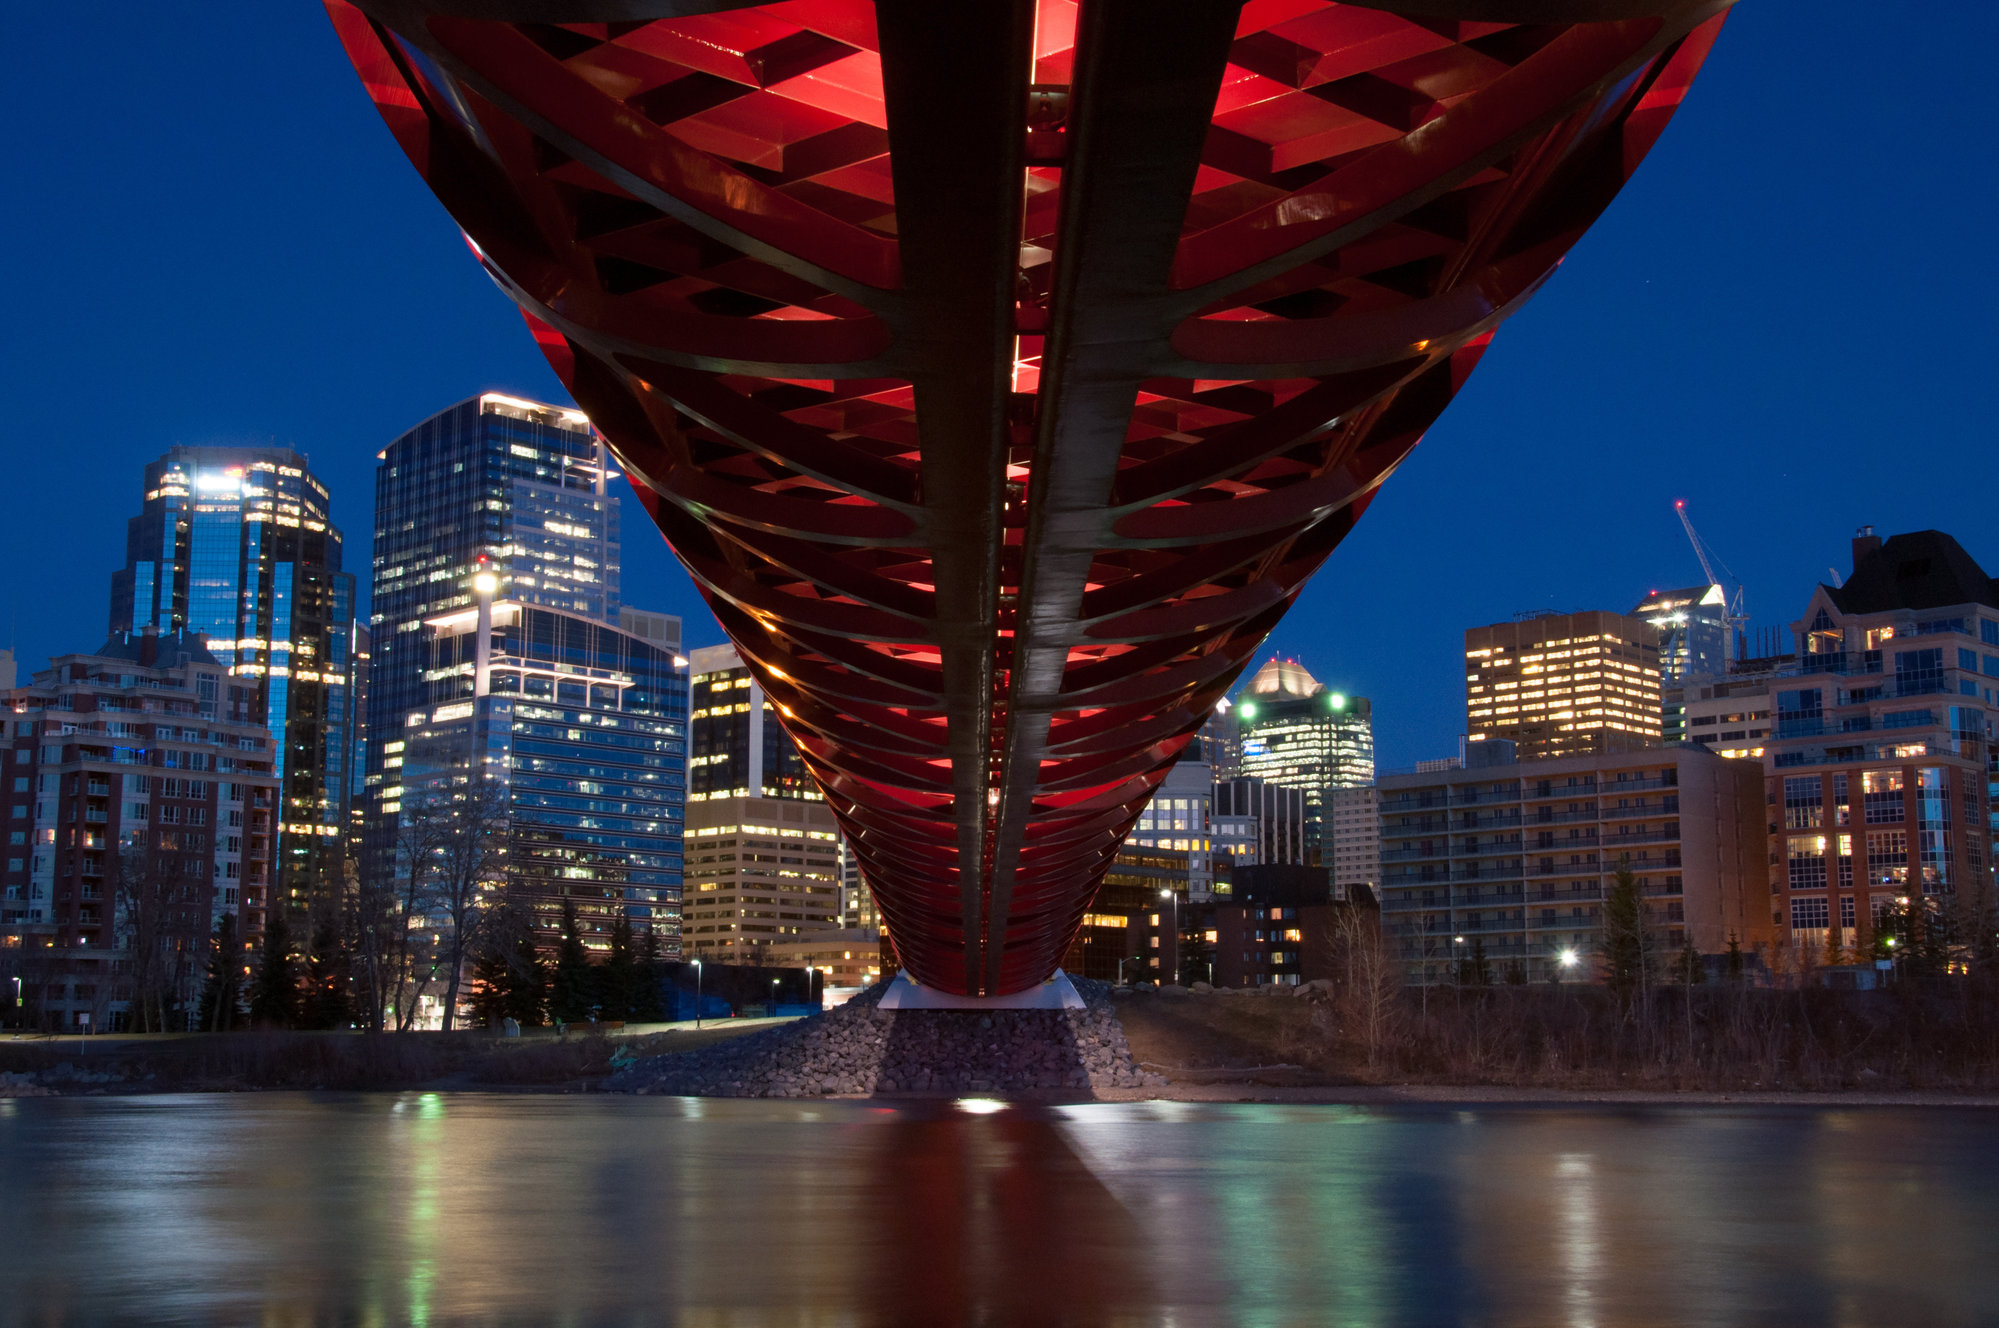 The Calgary Peace Bridge